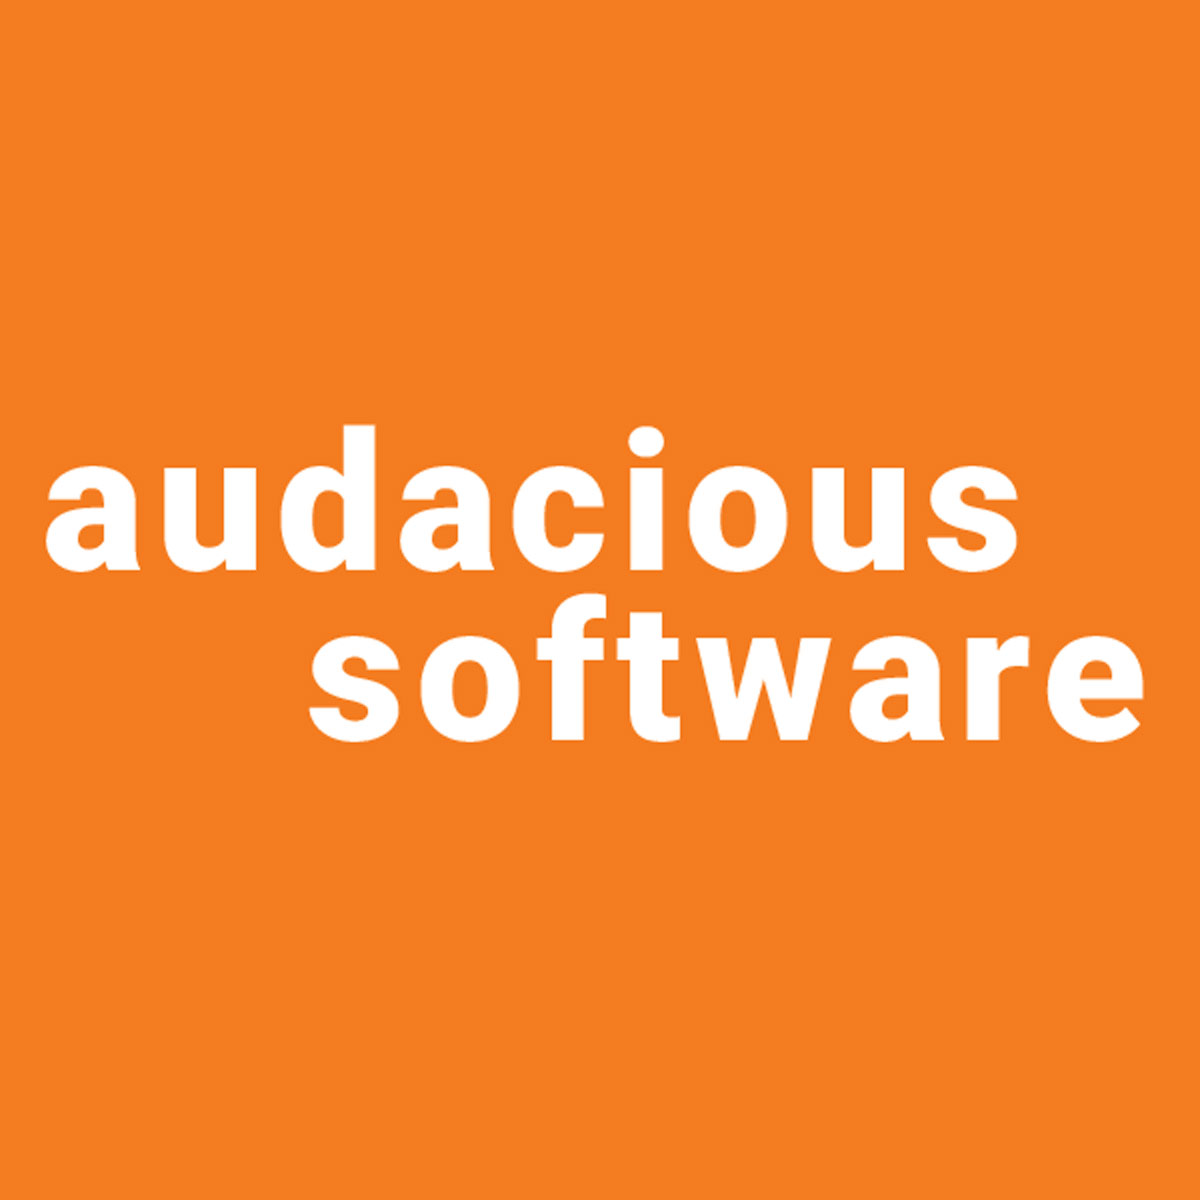 Audacious Software